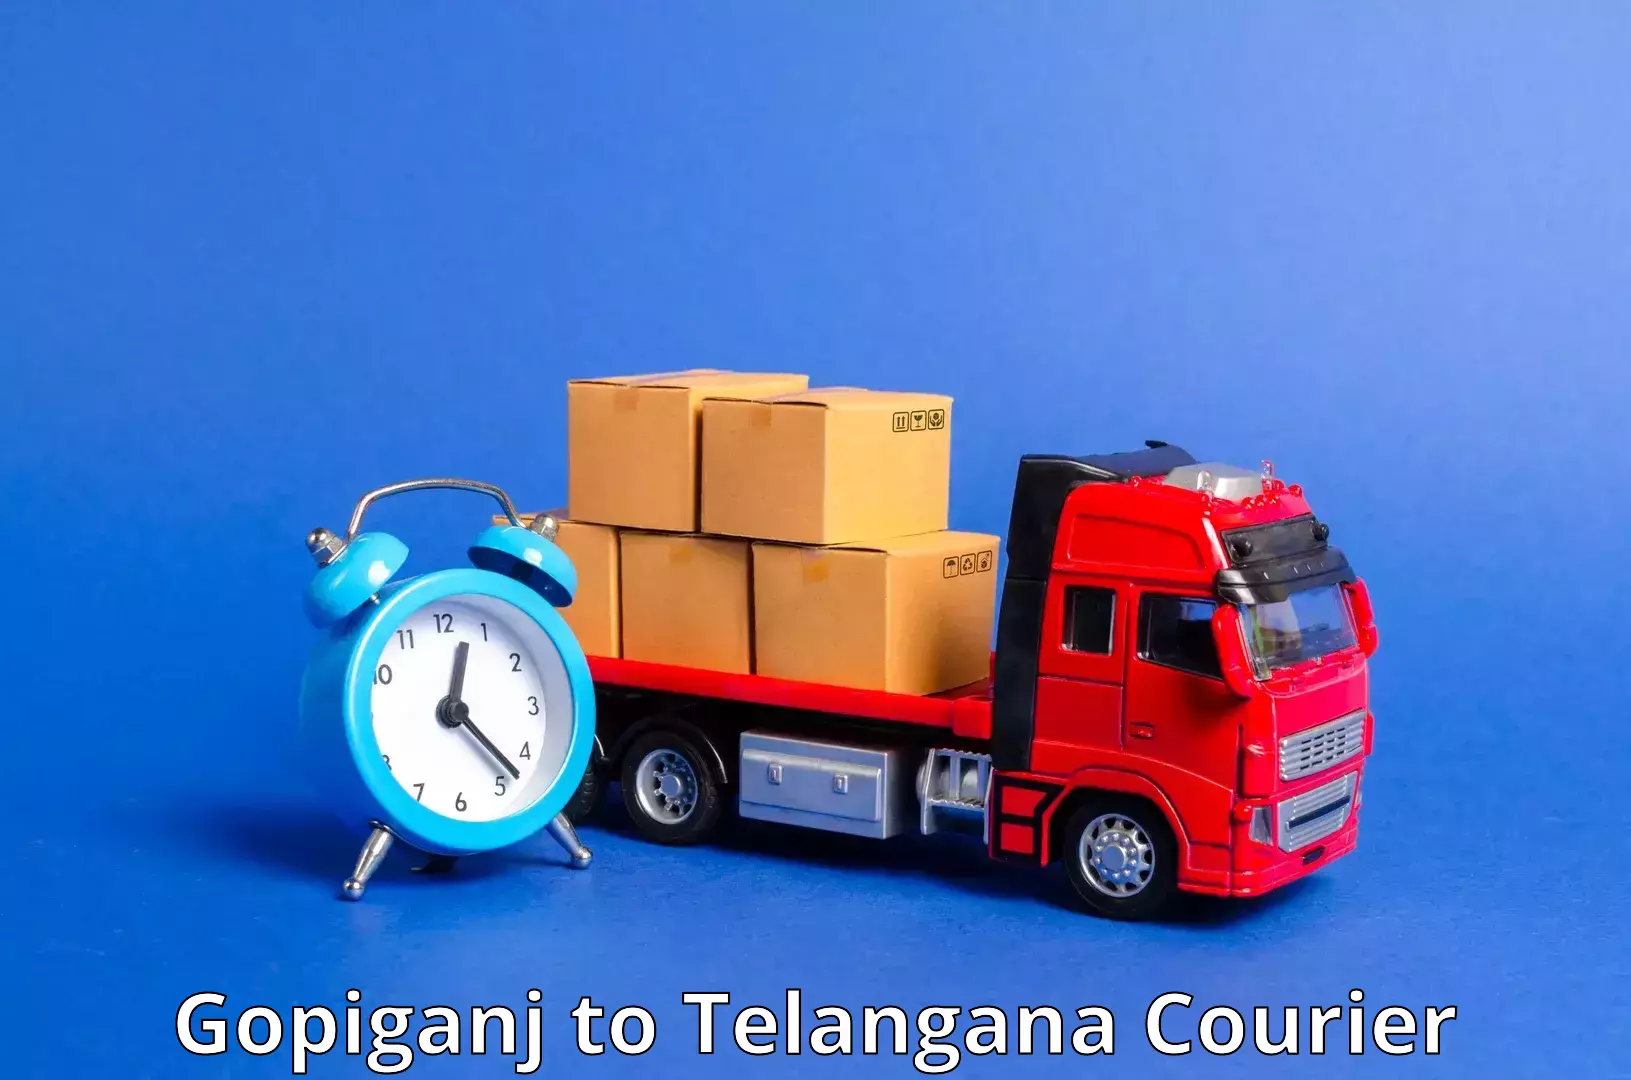 Global logistics network Gopiganj to Manthani